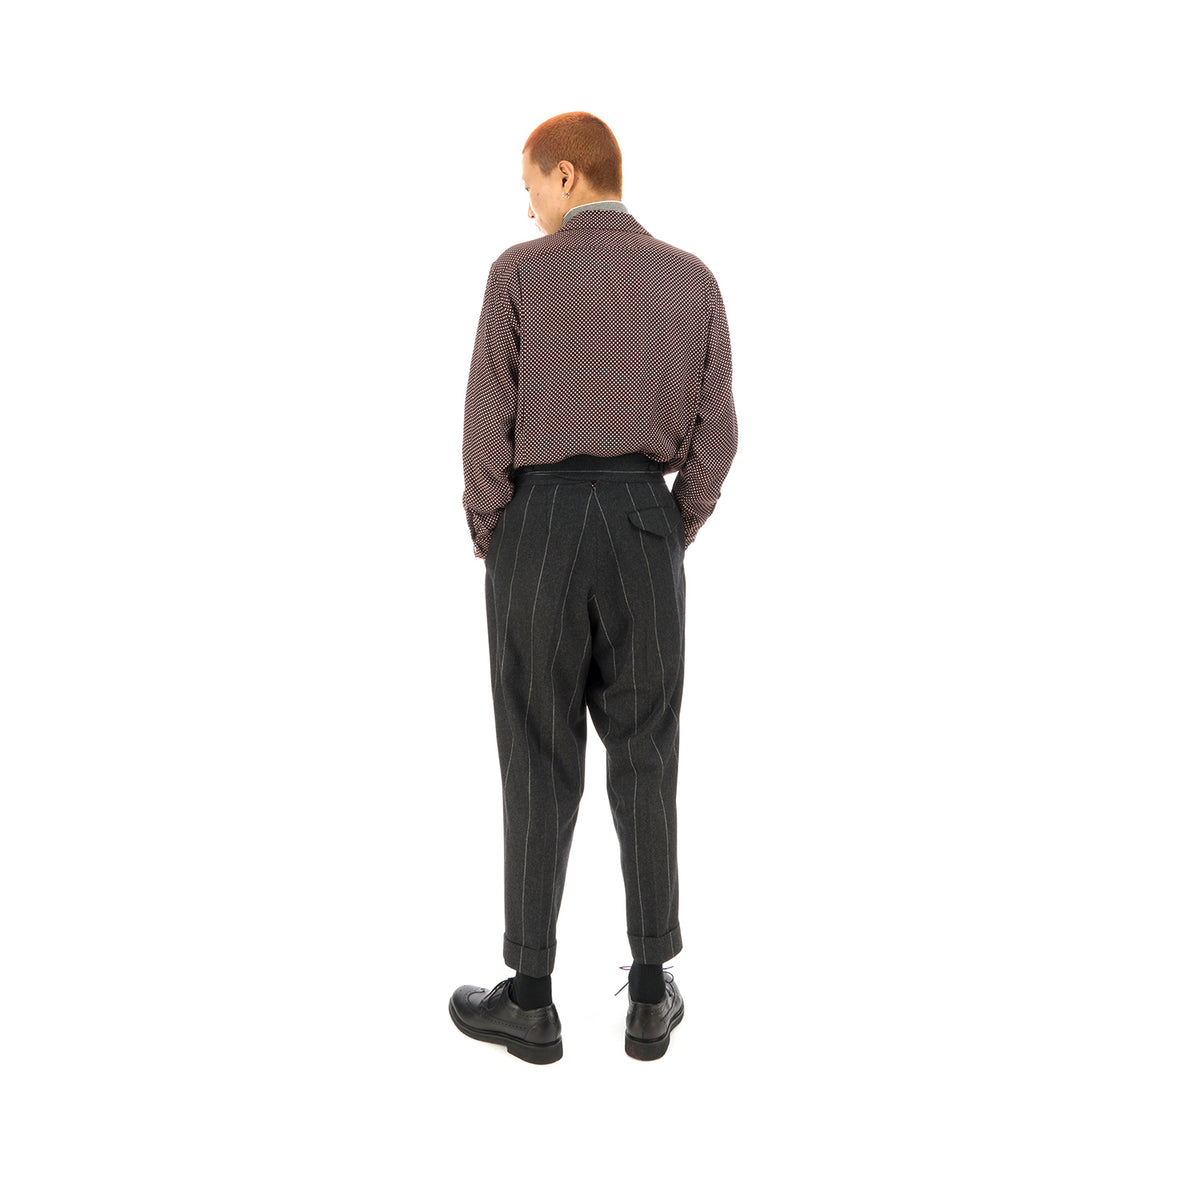 Haversack | Trousers Grey Pinstripe 461907-04 - Concrete